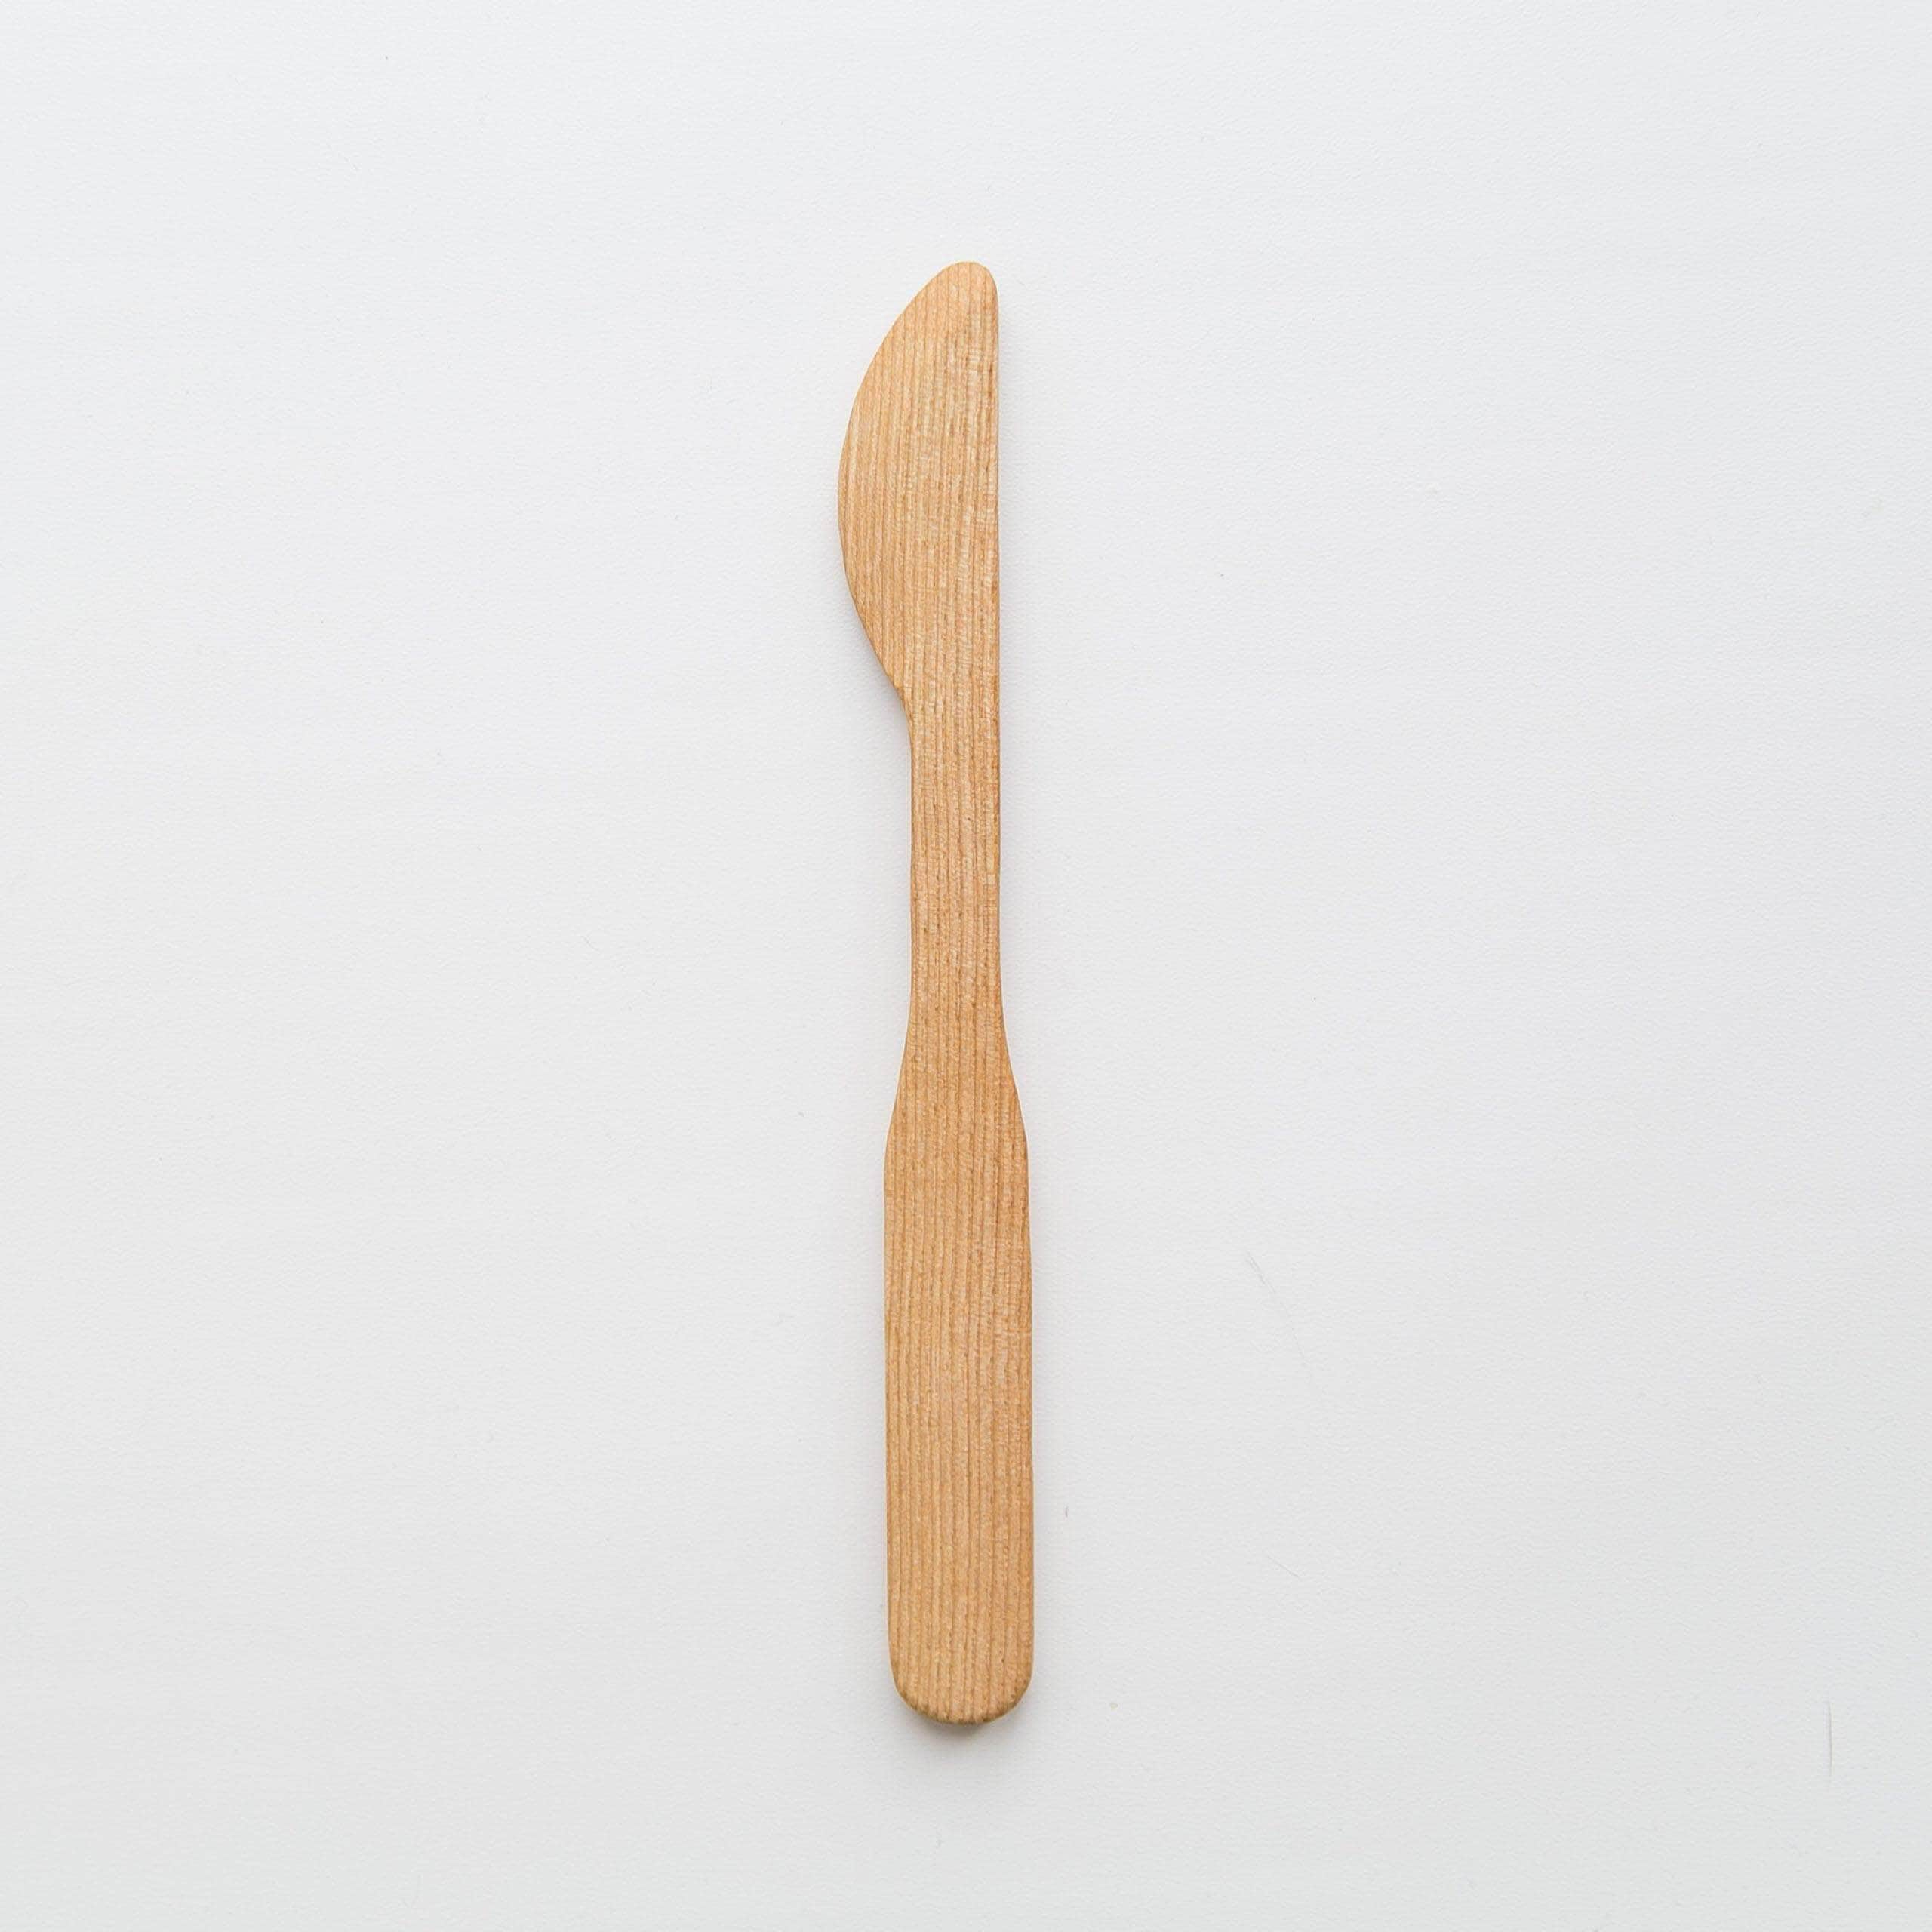 Arztset - wooden toy -5